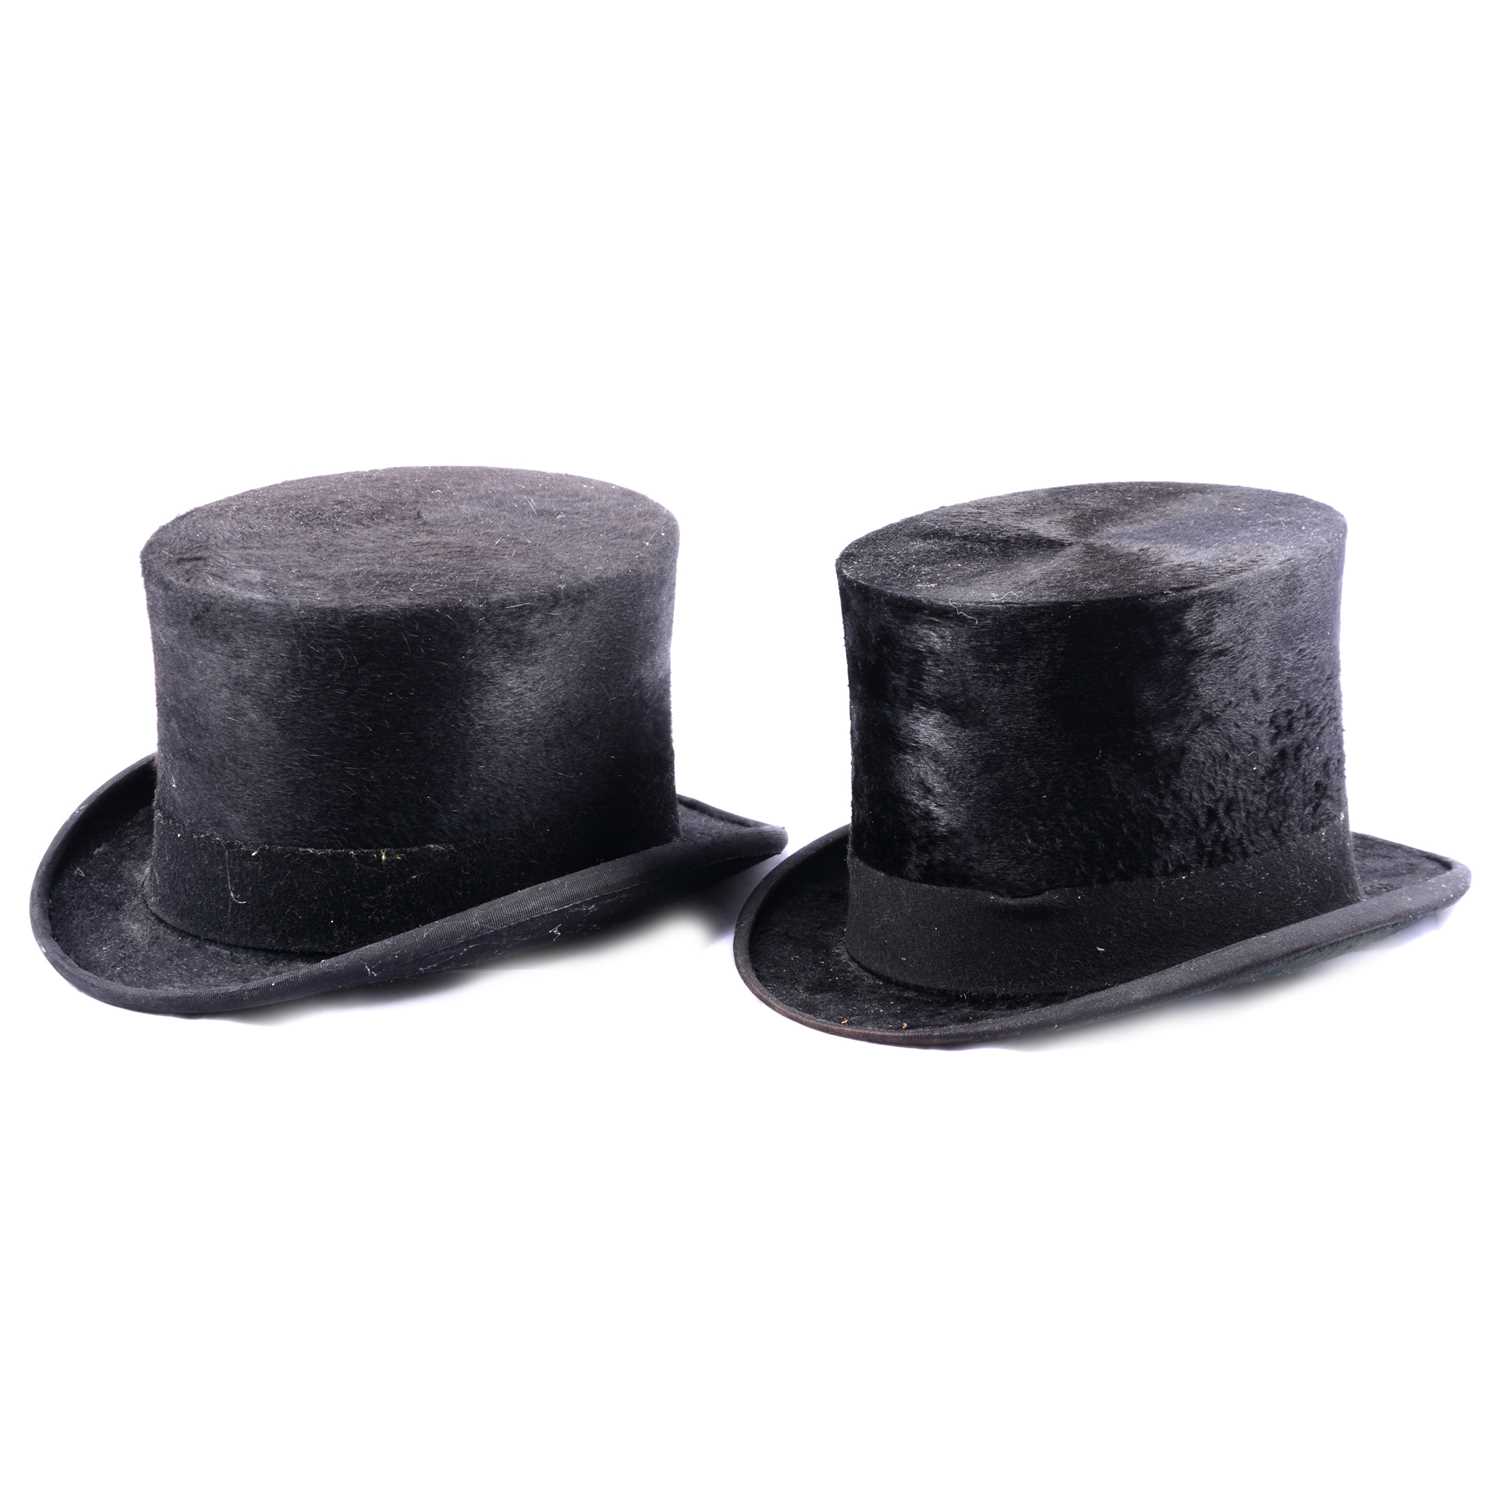 Five black top hats,